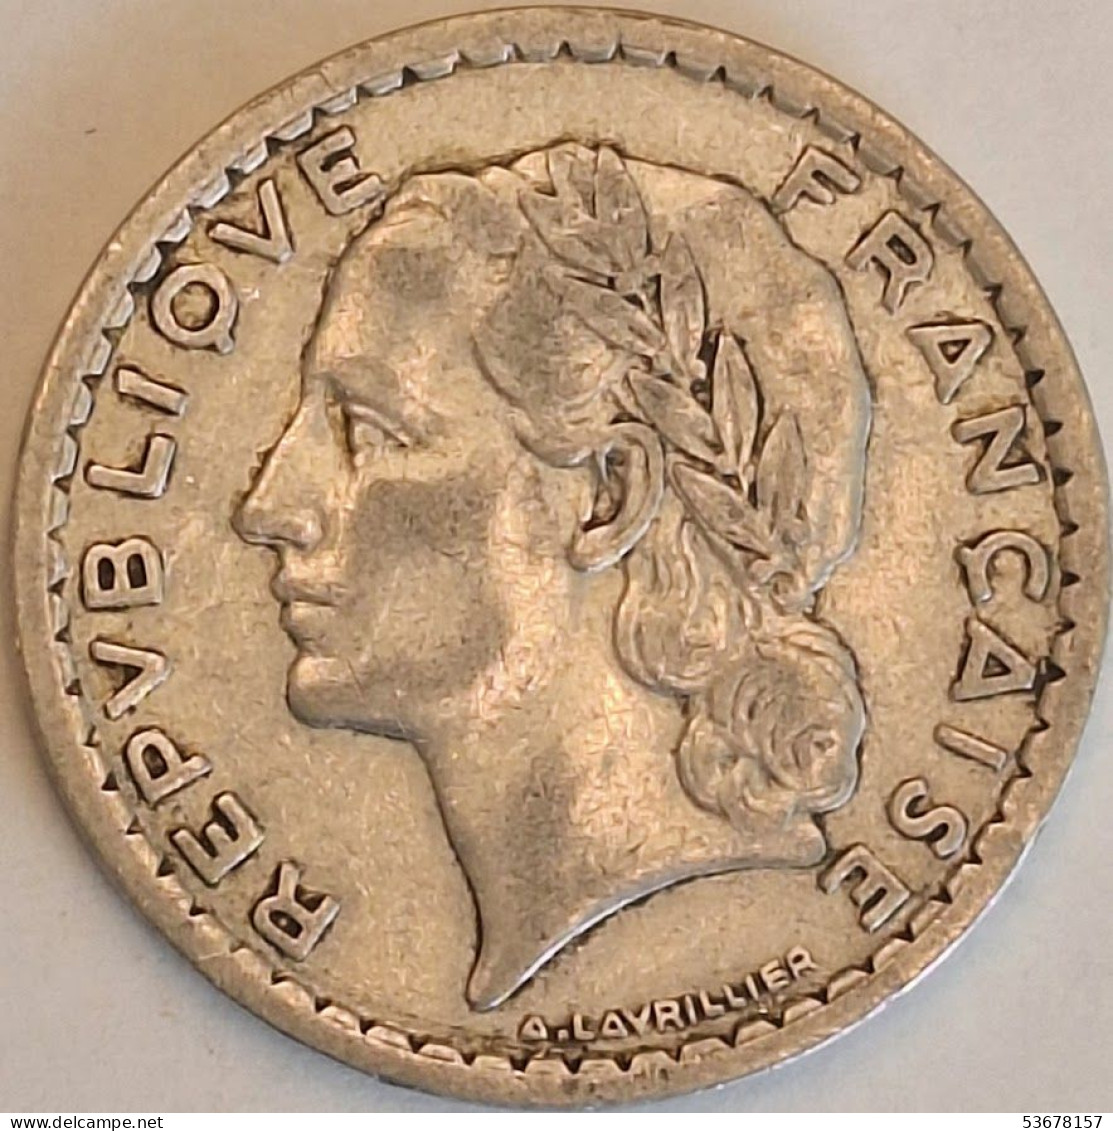 France - 5 Francs 1947 B Open 9, KM# 888b.2 (#4127) - 5 Francs